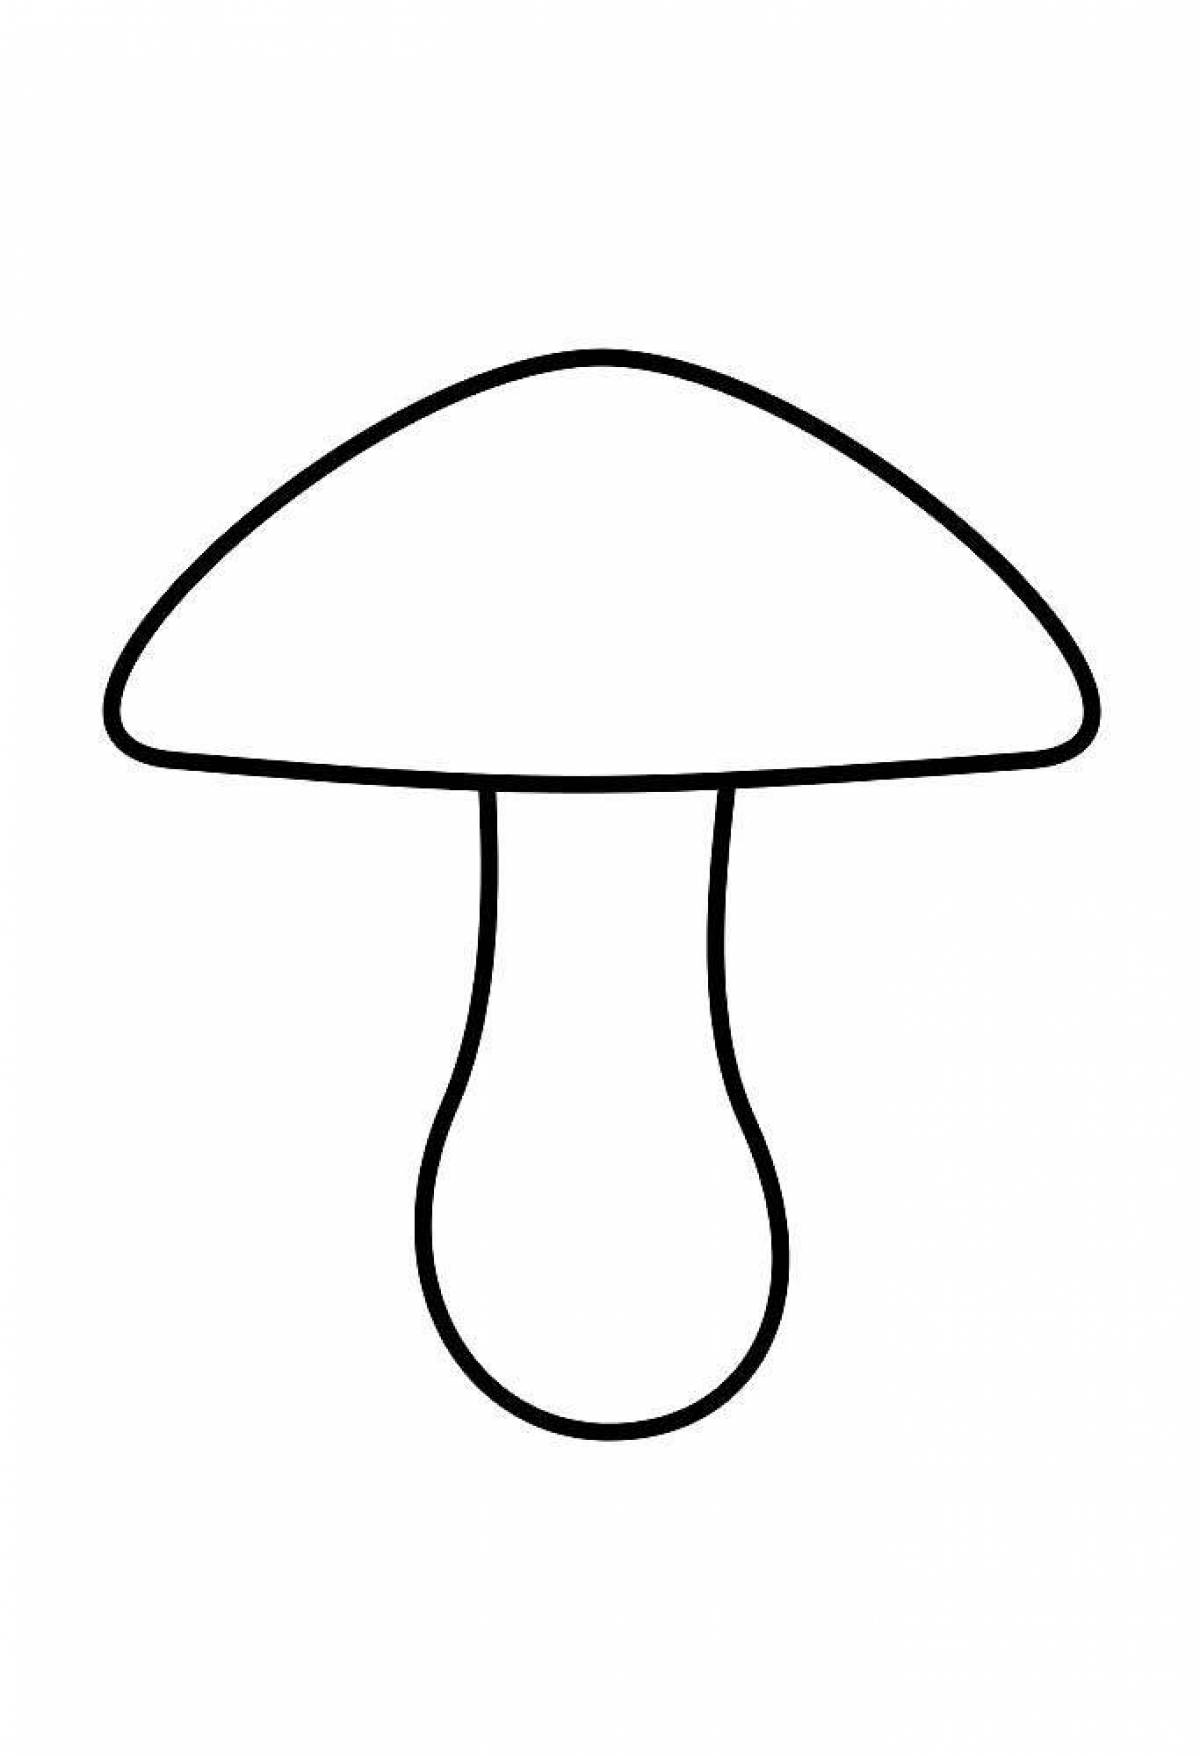 Flashing mushroom coloring page